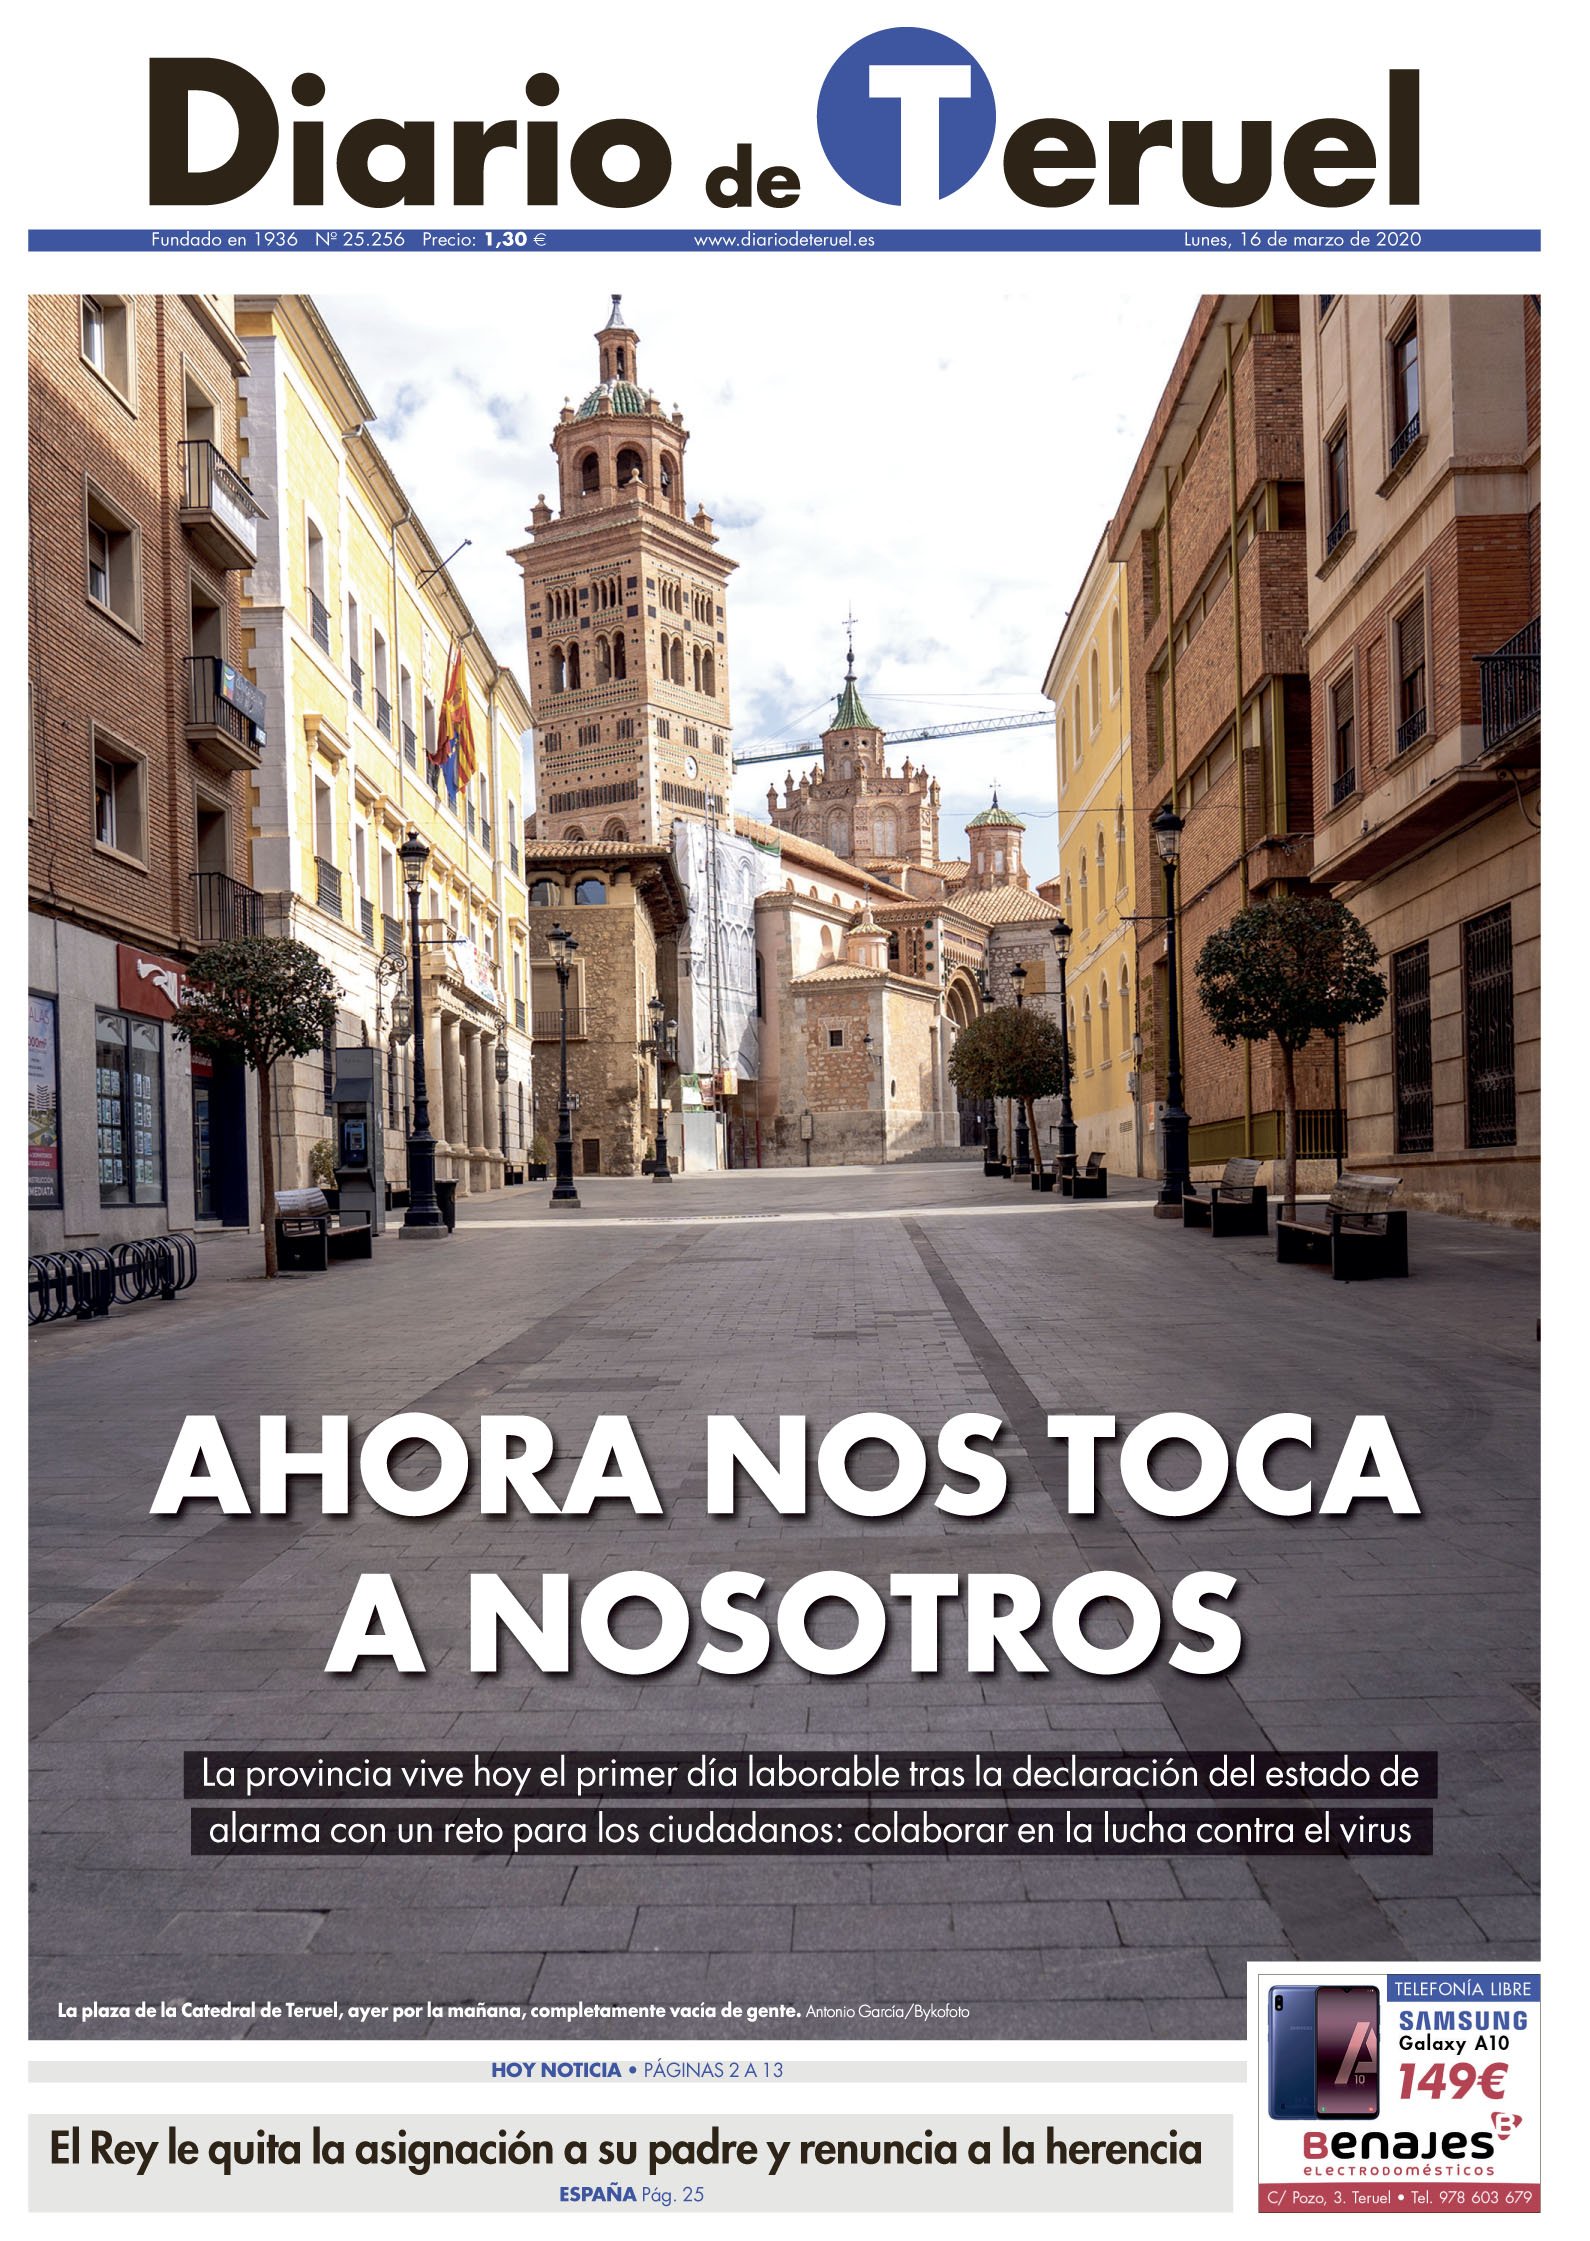 Recoger hojas Cíclope Alergia Diario de Teruel on Twitter: "No lo olvides, hoy nos toca a nosotros  https://t.co/FajpMEaSjx" / Twitter